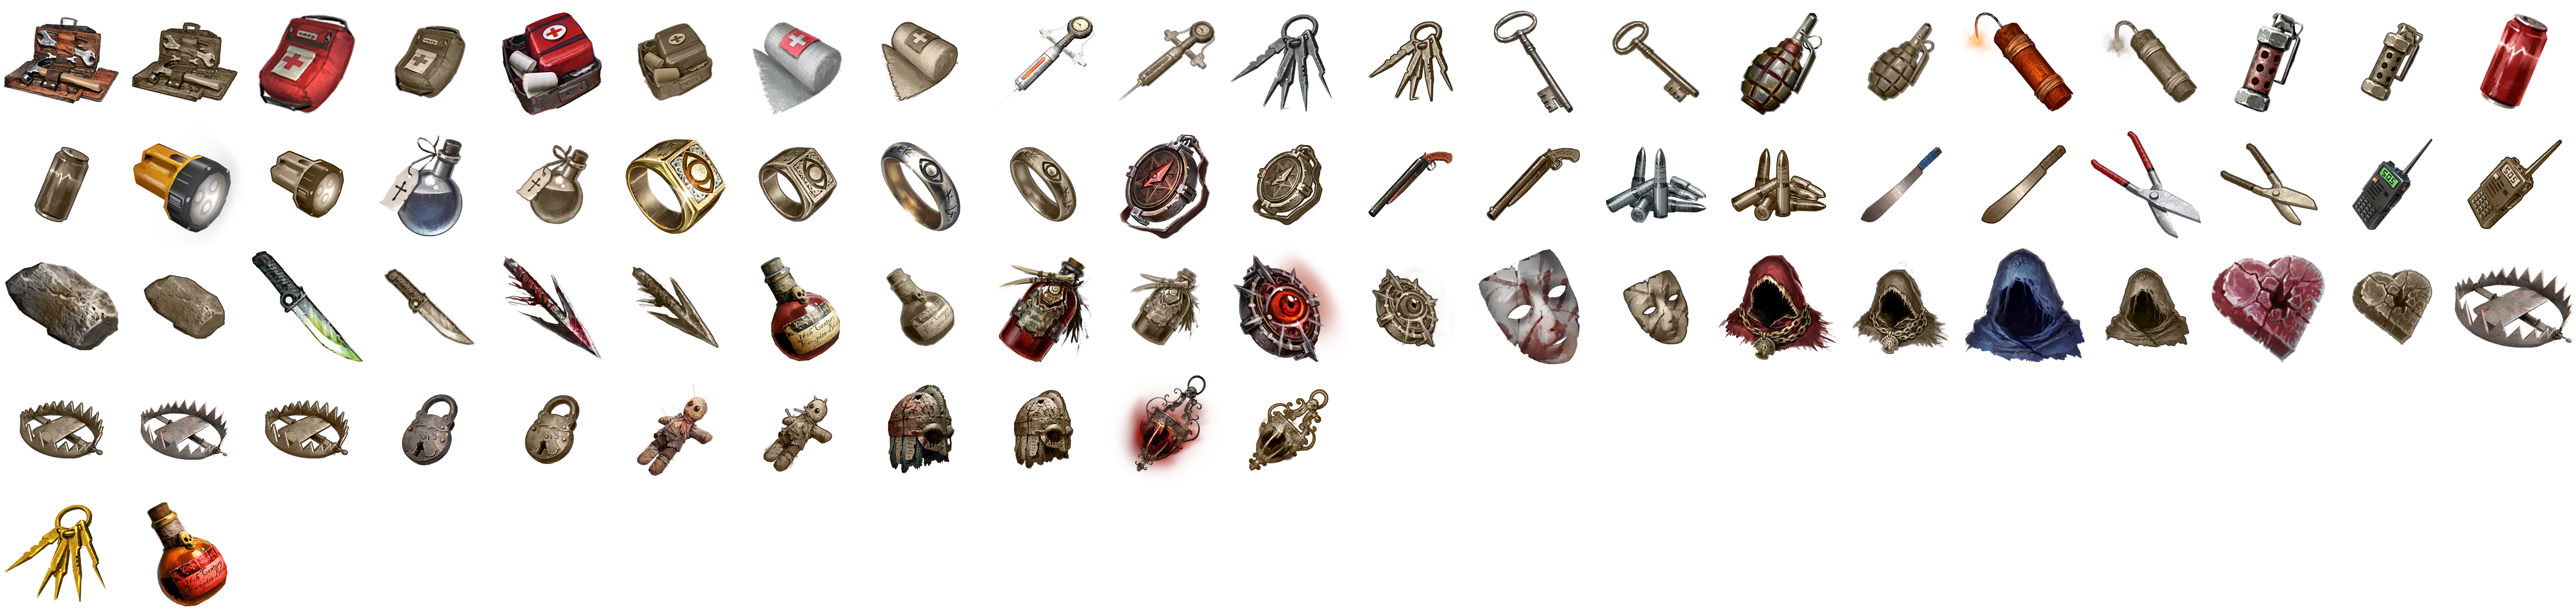 Horrorfield - Items